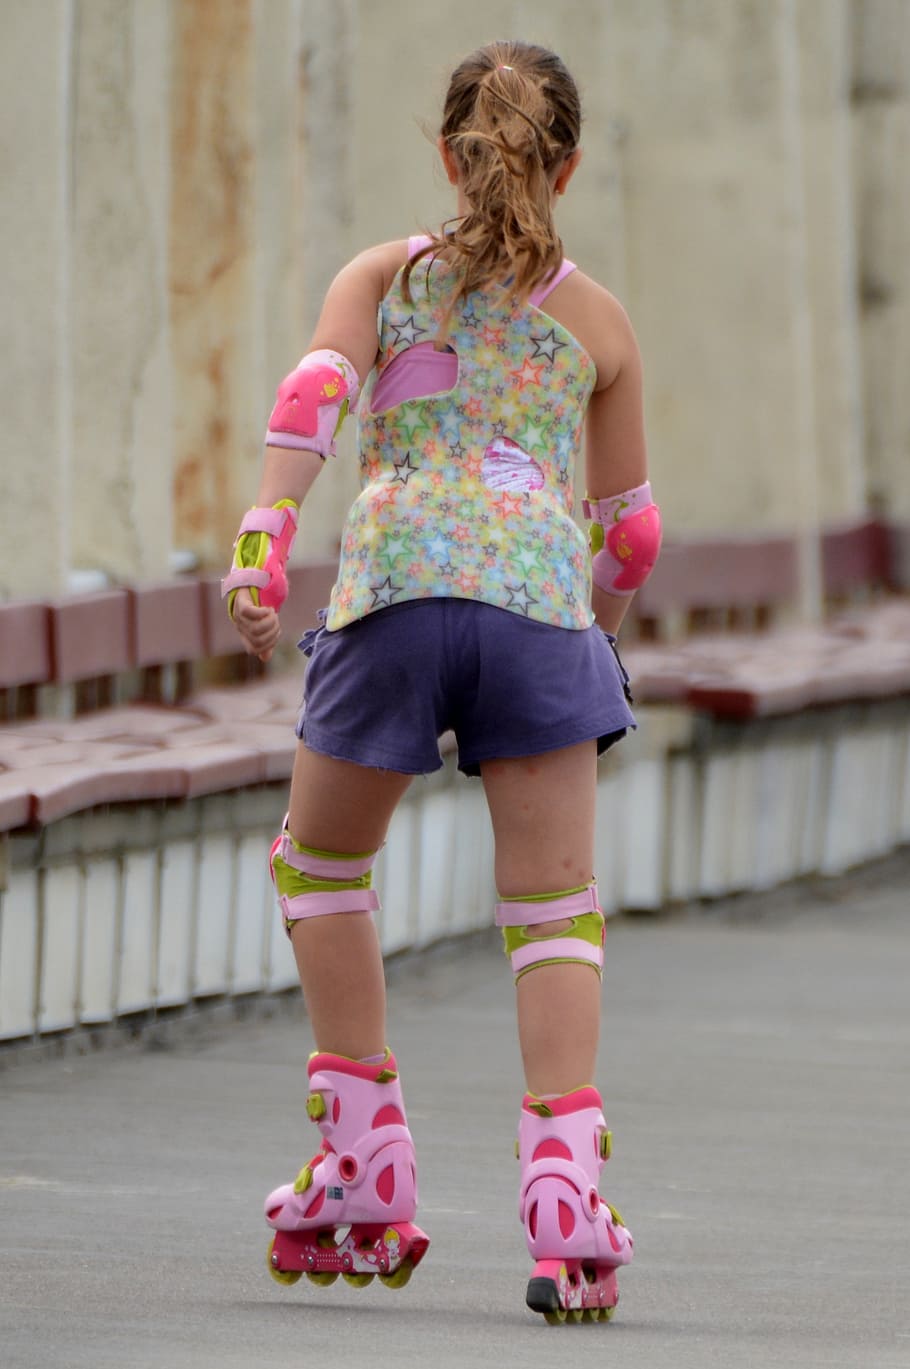 girl, playing, road, day time, child, roller skate, people, sports, roller skates, full length